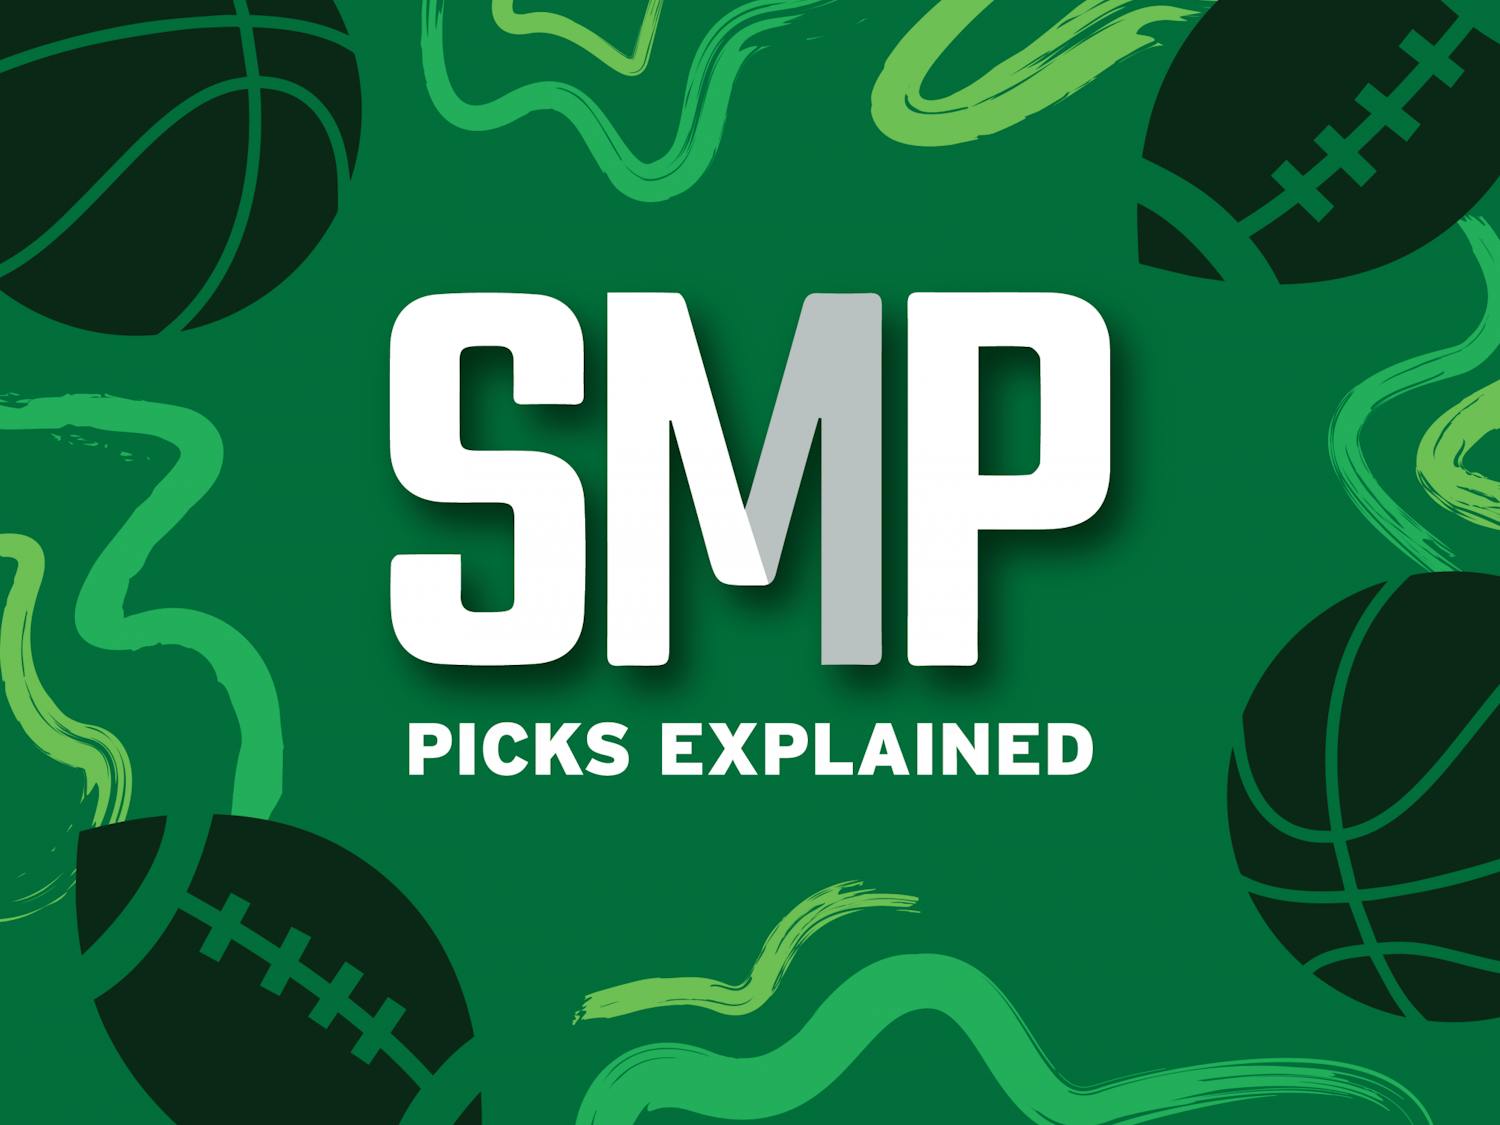 BURCHARD_SMP Picks explained_LA-01.png